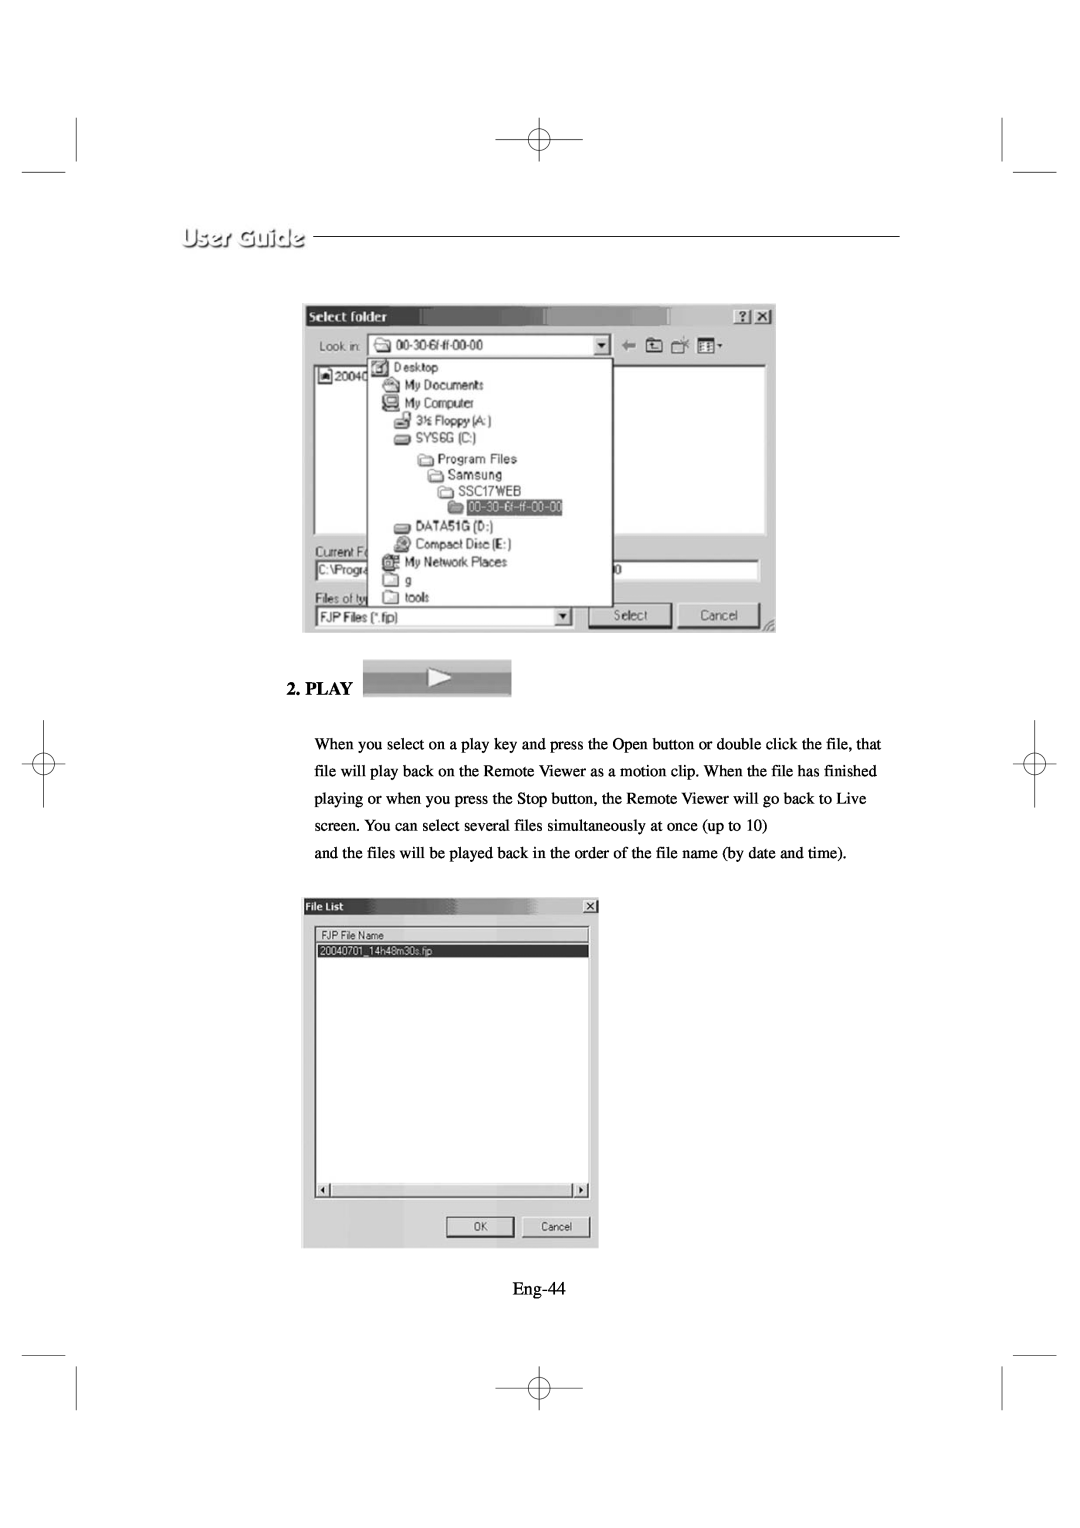 Samsung SSC17WEB manual Play, Eng-44 